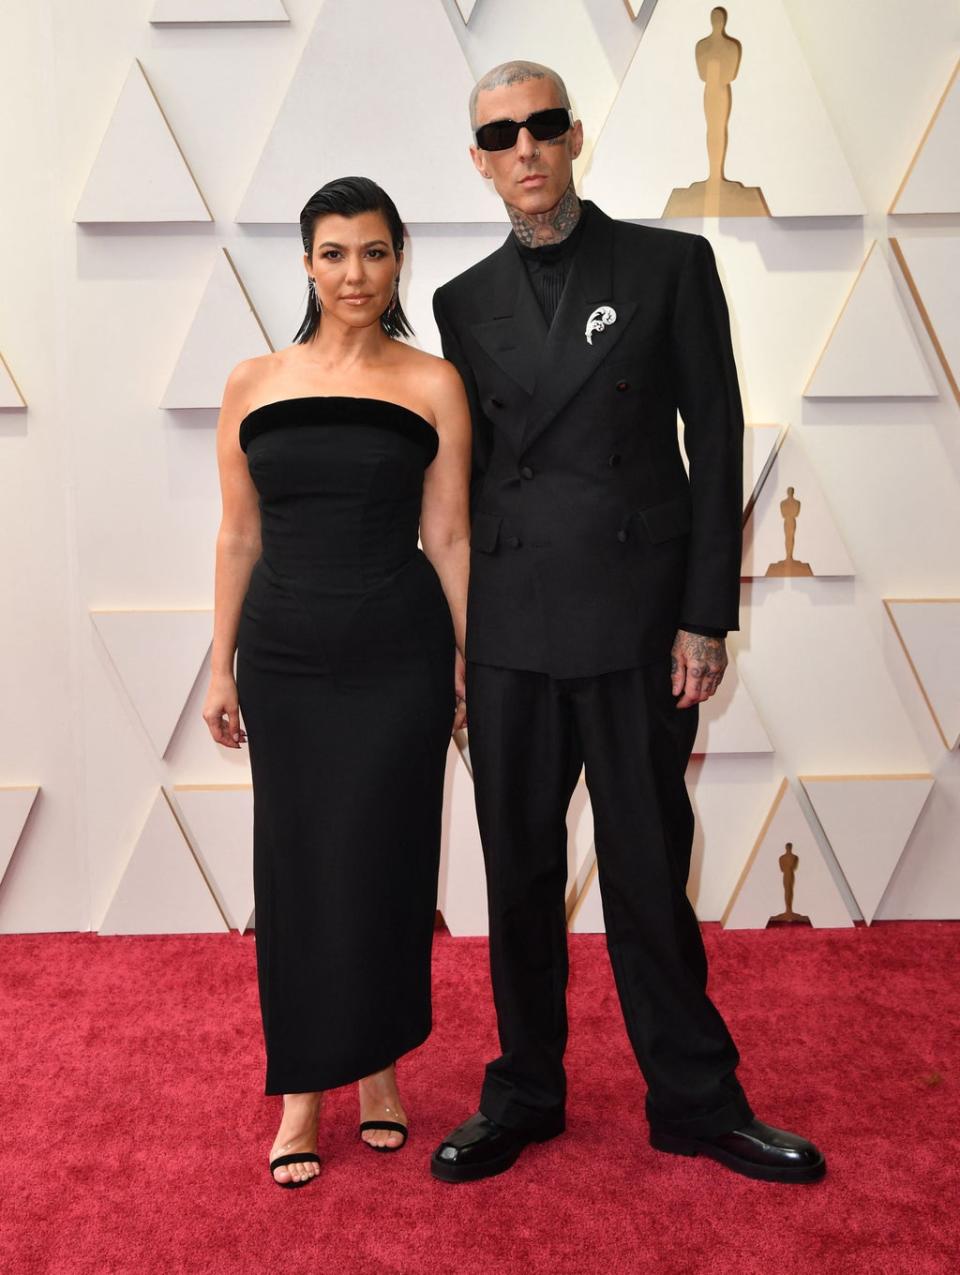 Kourtney Kardashian and Travis Barker attend the Oscars 2022 (AFP via Getty Images)